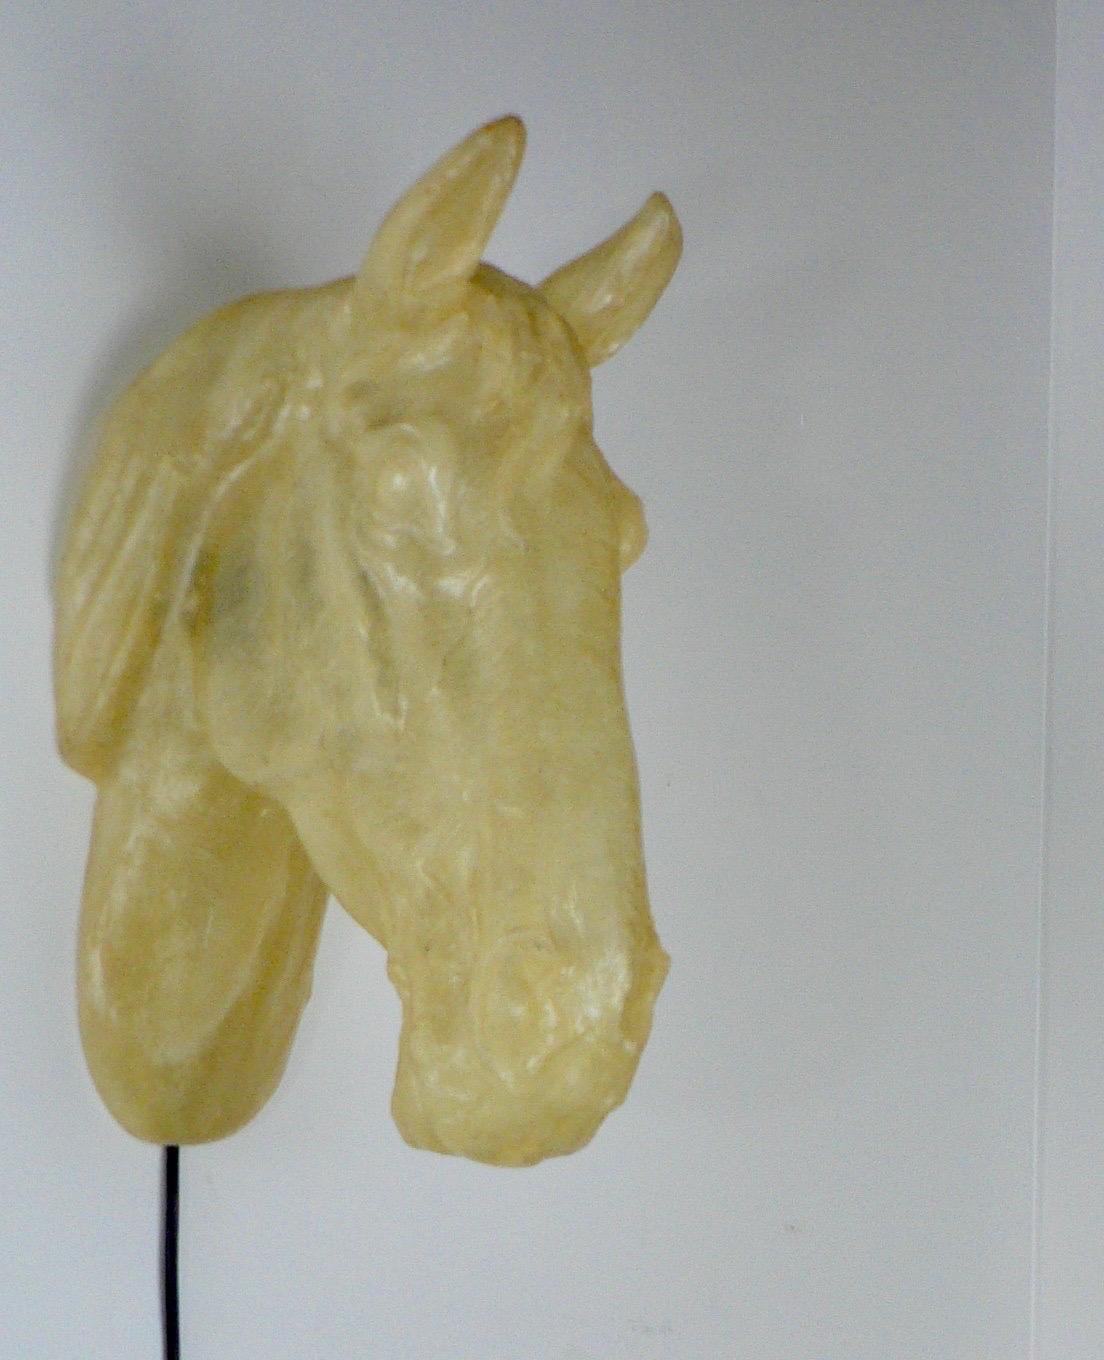 Moulé Grande applique murale en fibre de verre en forme de tête de cheval - France - 1970 en vente